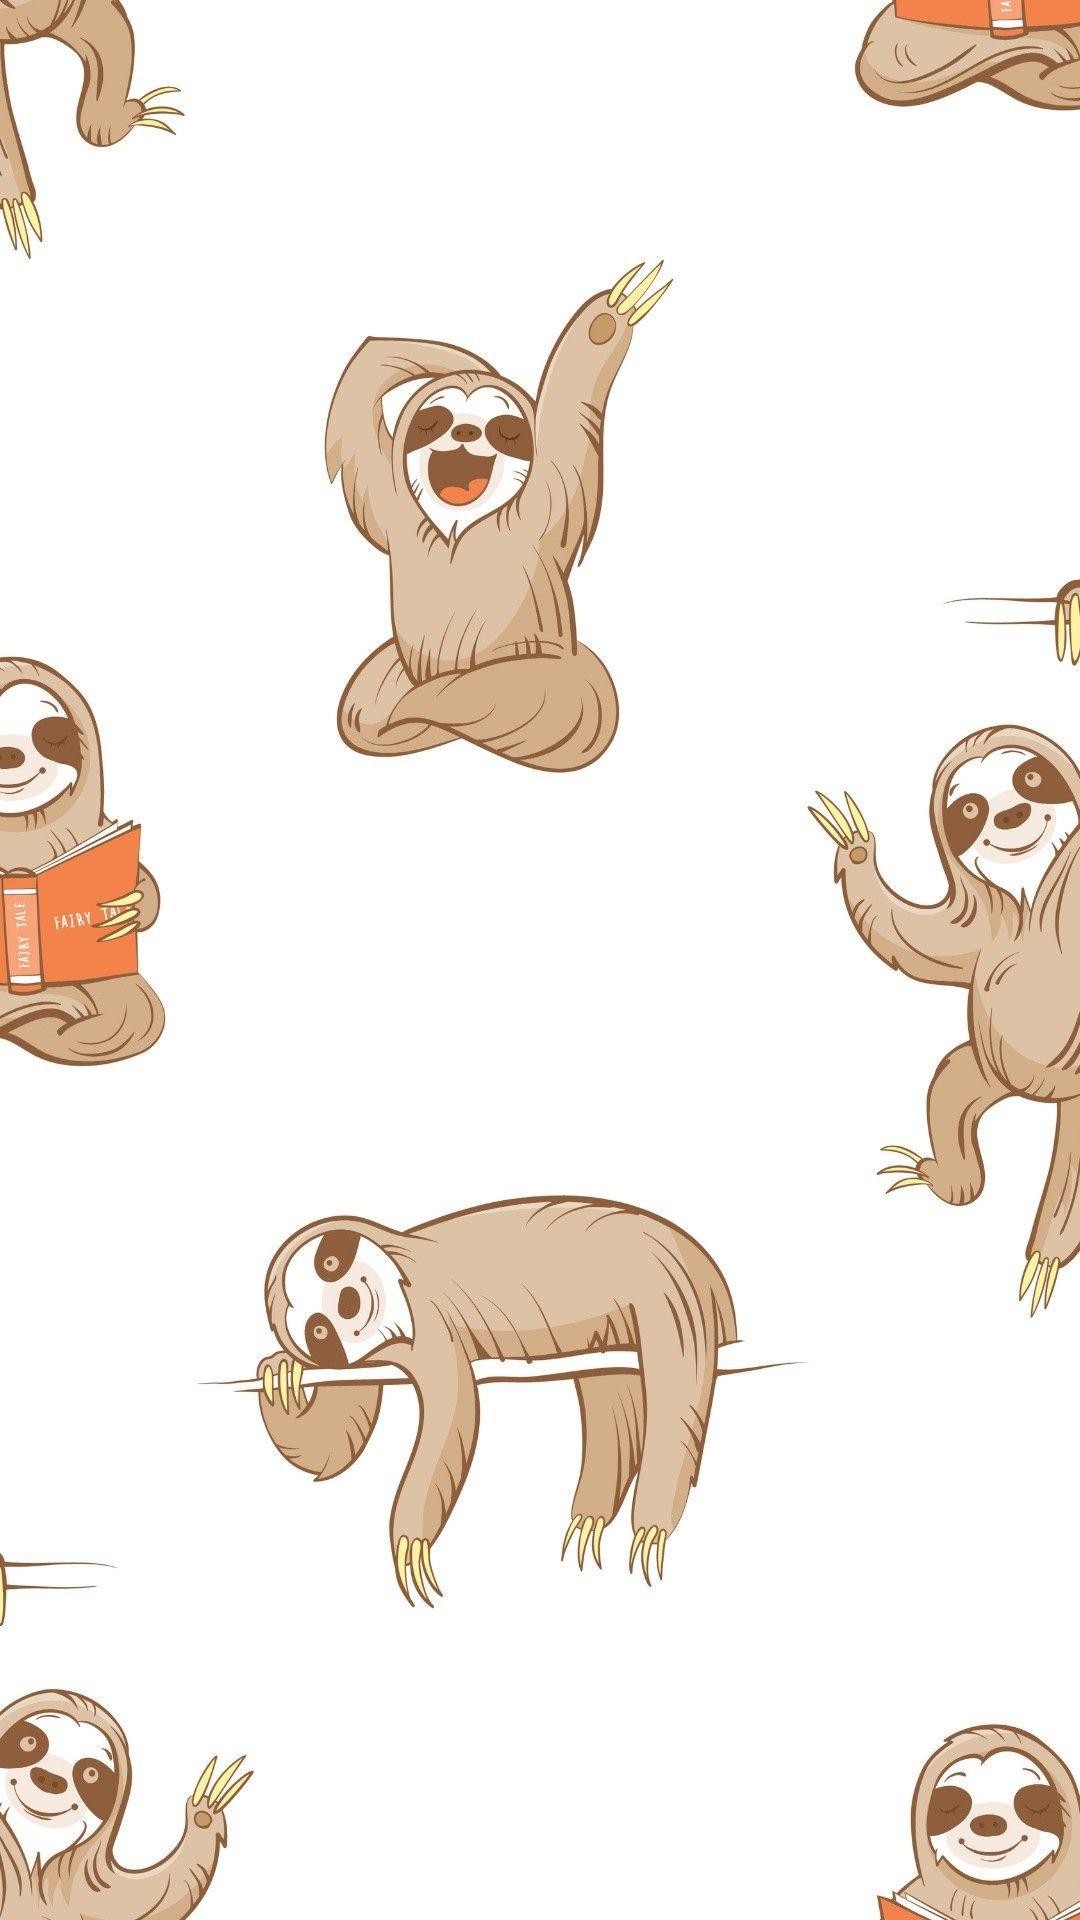 Phone Background. Phone background patterns, Sloth